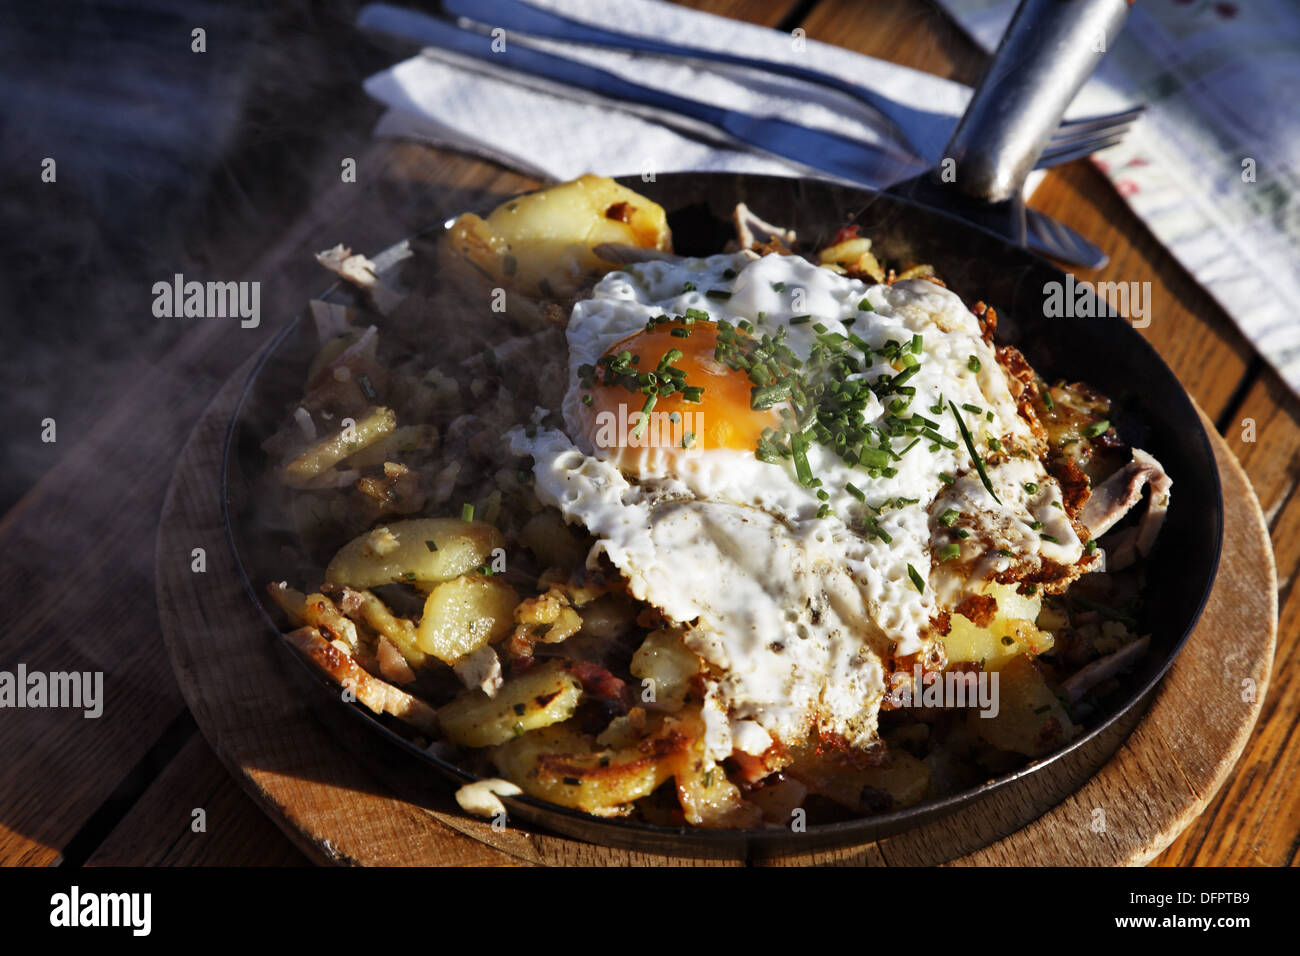 Austria, Tyrol, Kitzbuhel, Skiing, Melkalm, Hut, Bratkartoffeln with egg, Stock Photo